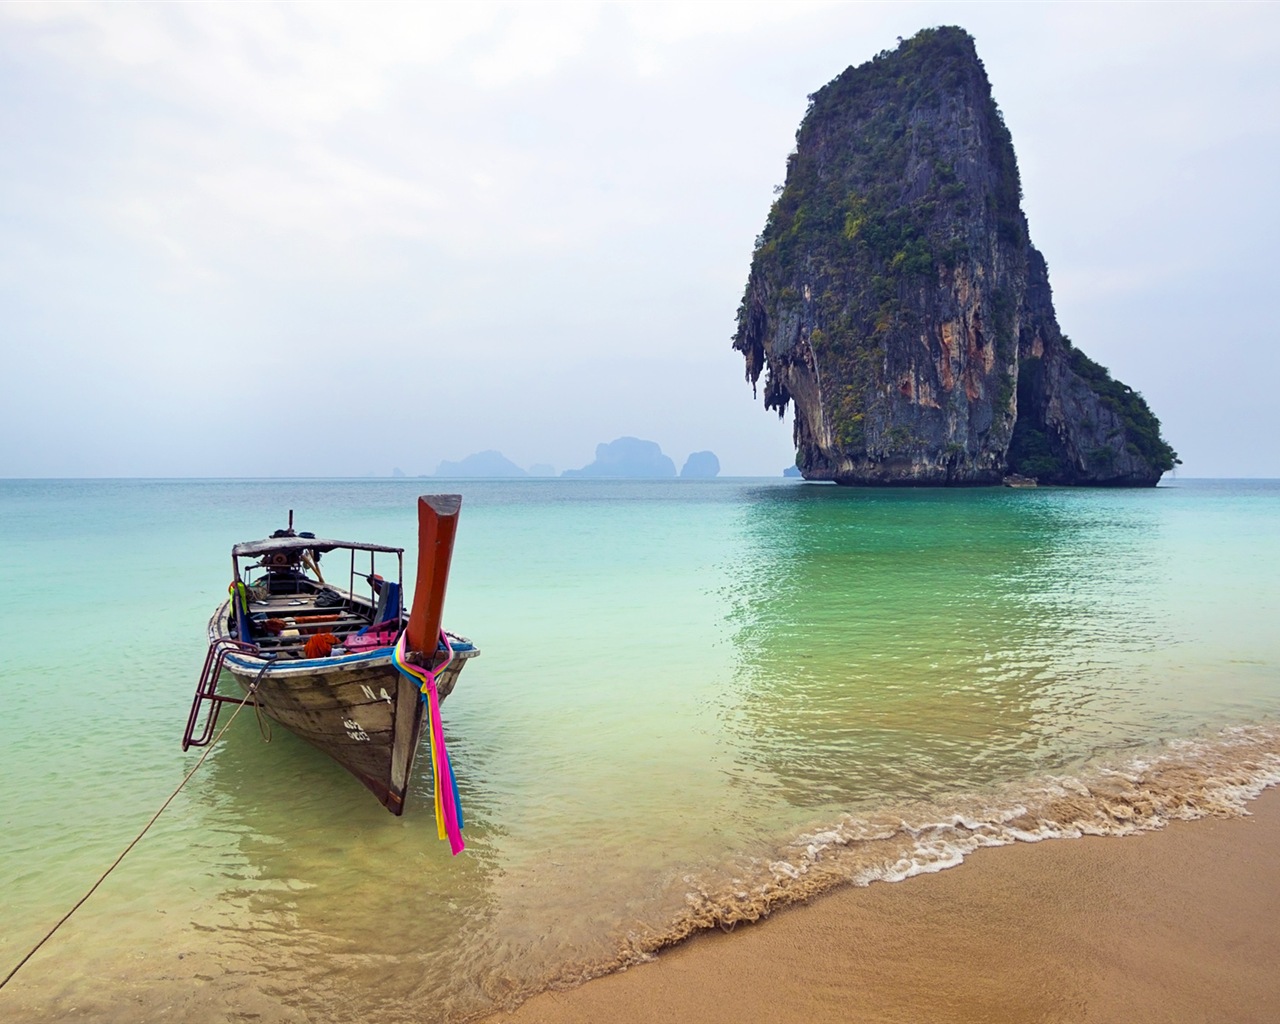 Windows 8 theme wallpaper: beautiful scenery in Thailand #3 - 1280x1024